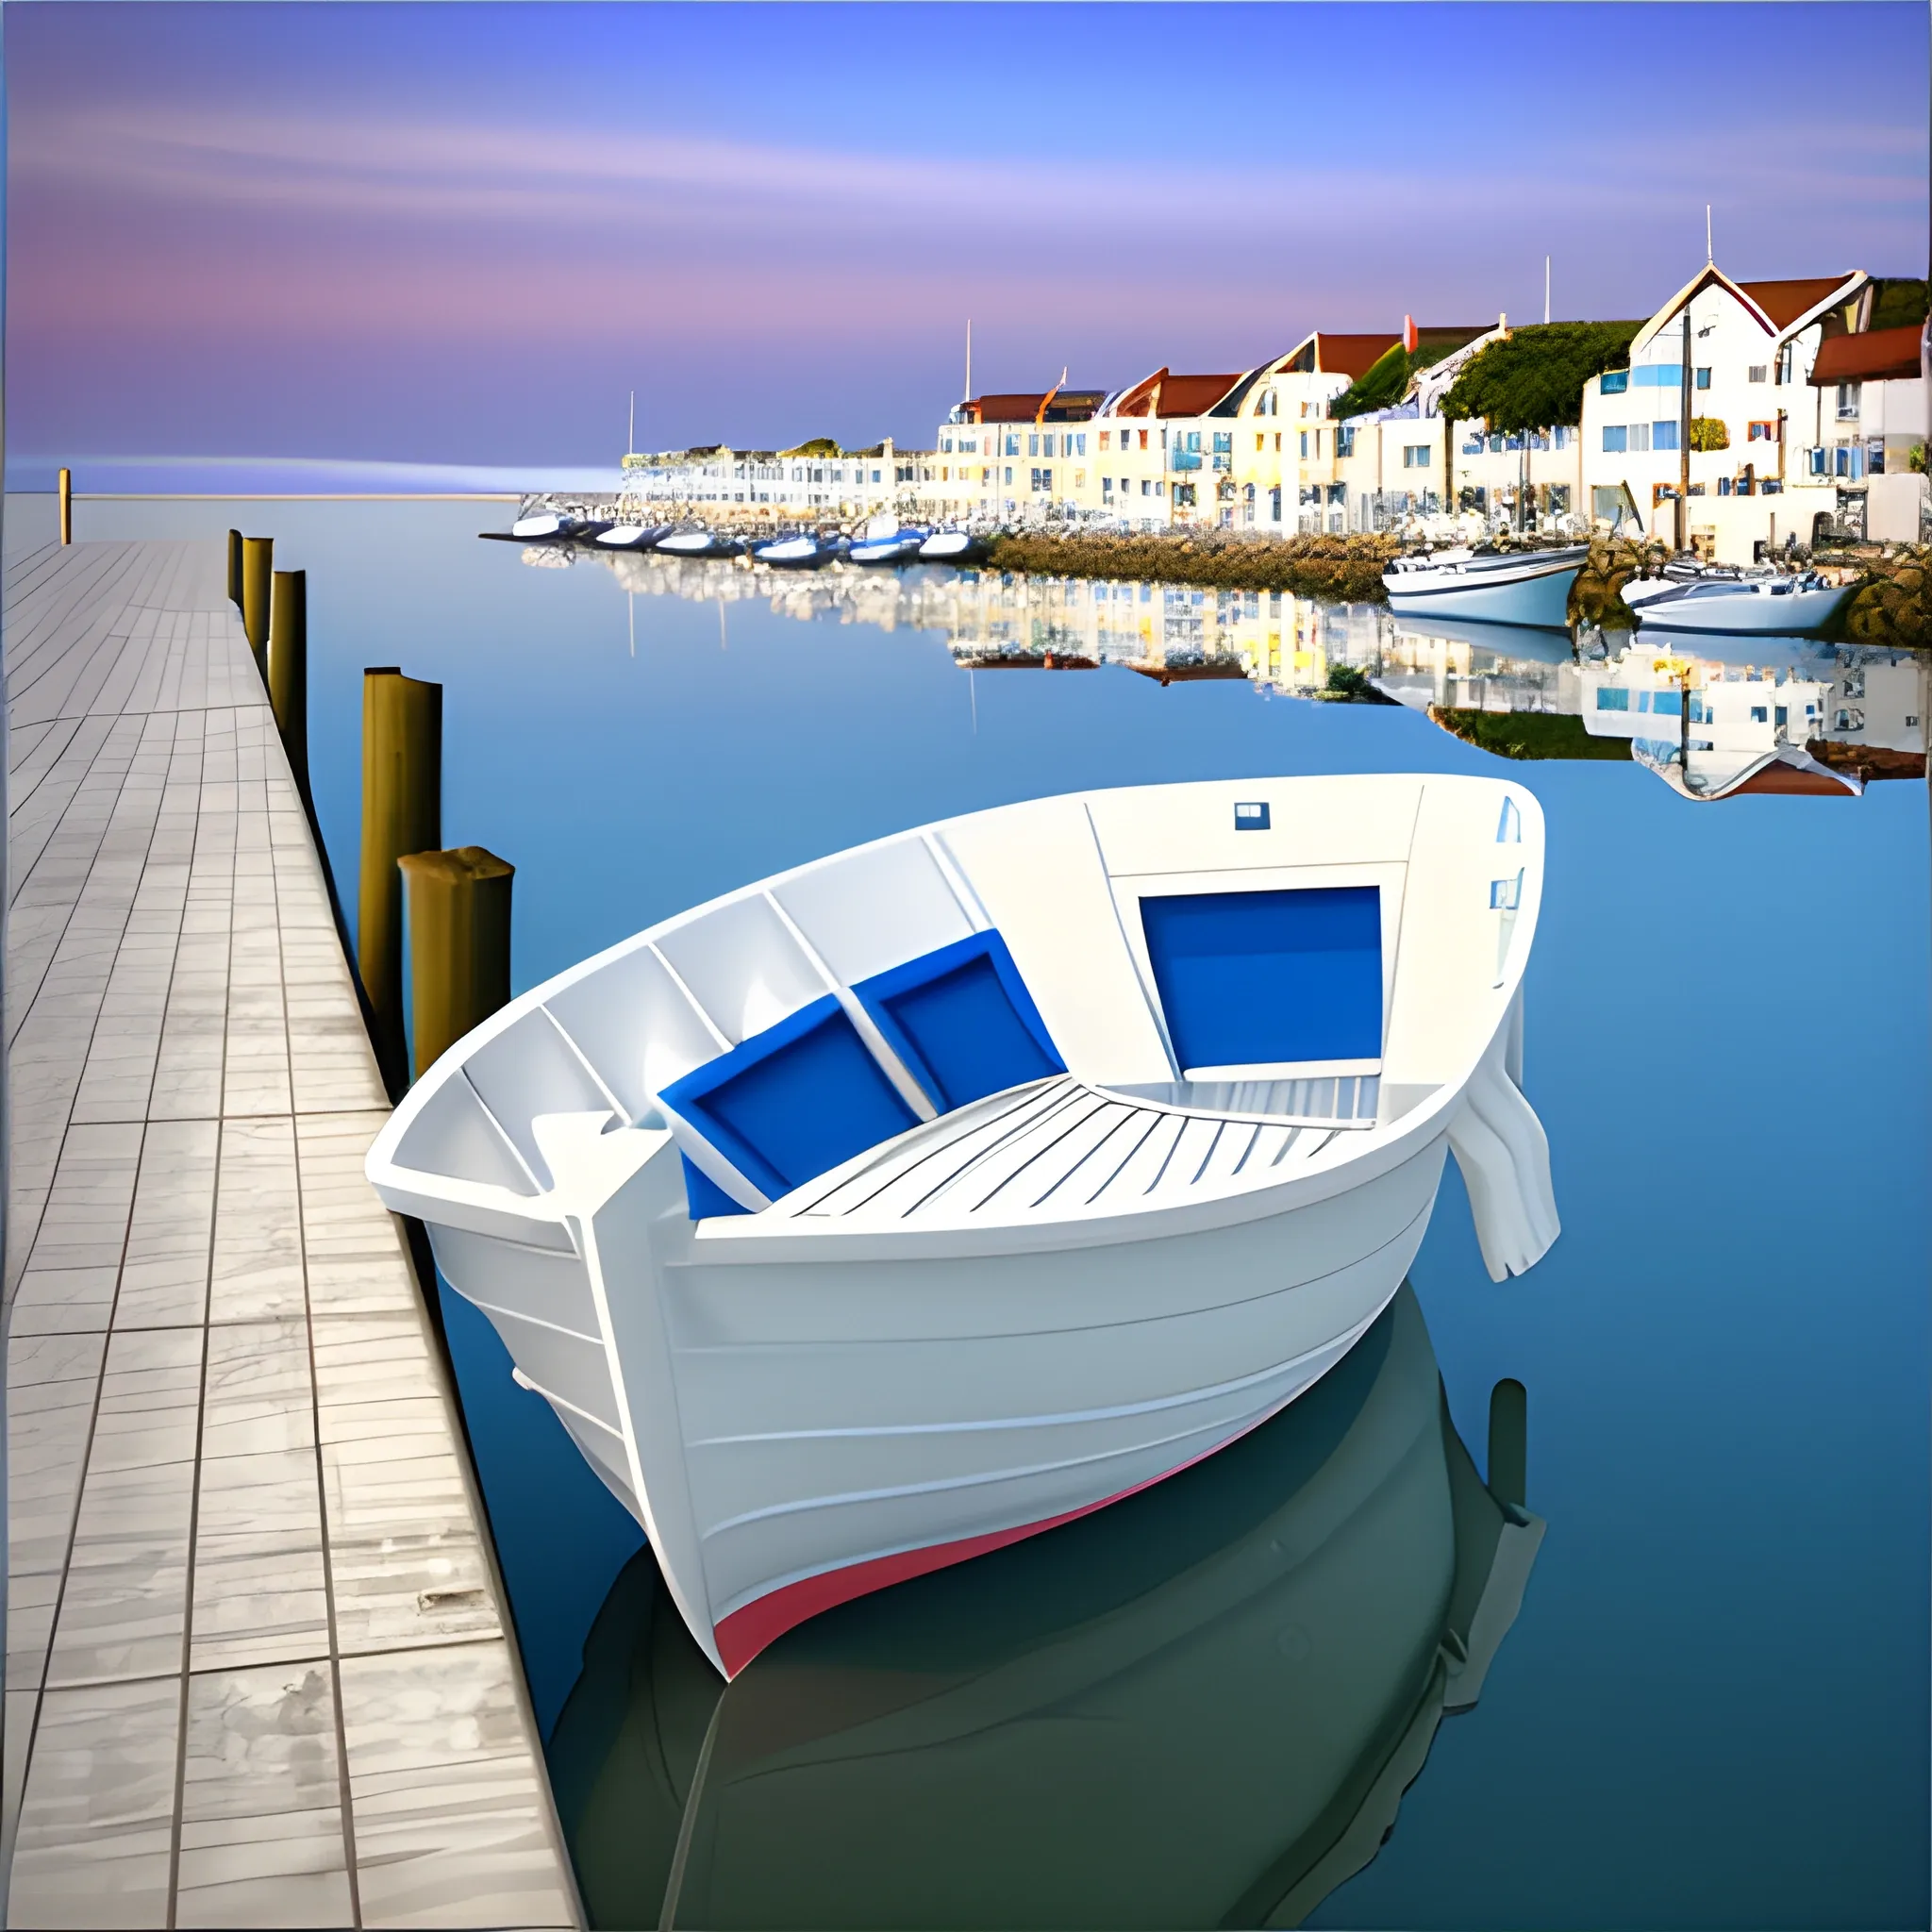 marina, one boat, reflections, horizon, shore, white houses, fisherman, in the distance, anna masana, 3D